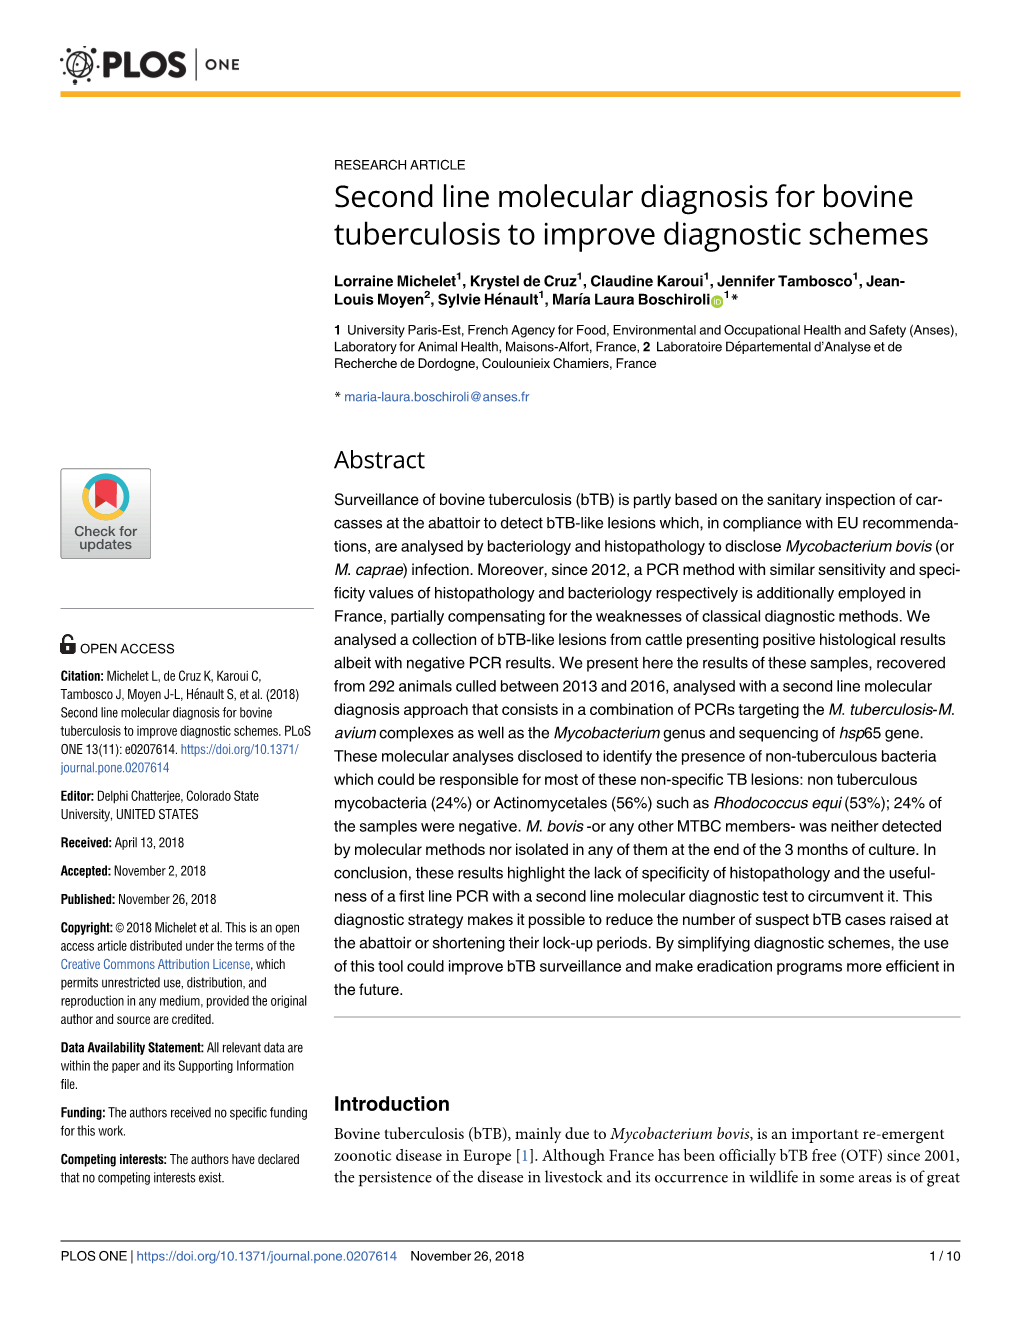 Second Line Molecular Diagnosis for Bovine Tuberculosis to Improve Diagnostic Schemes